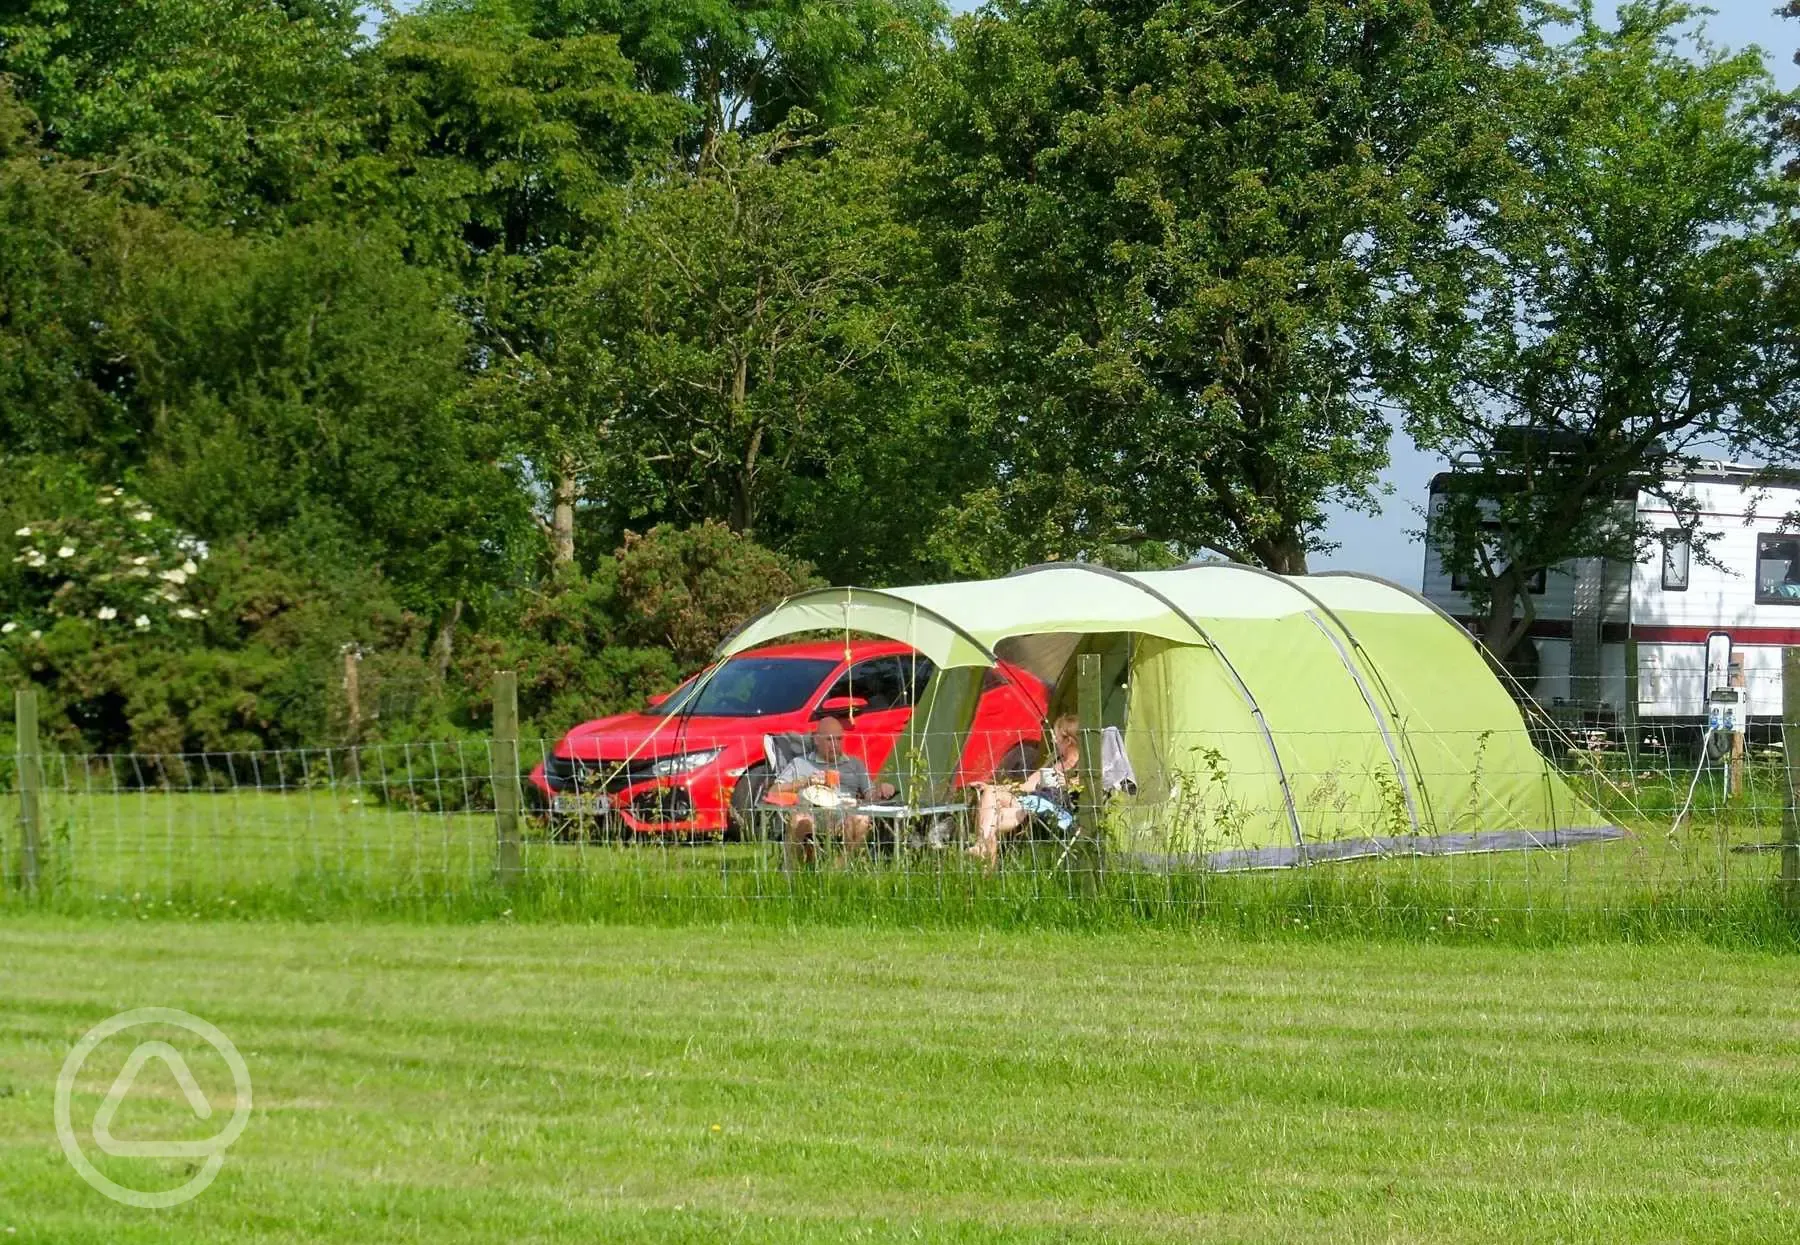 Happy tent campers